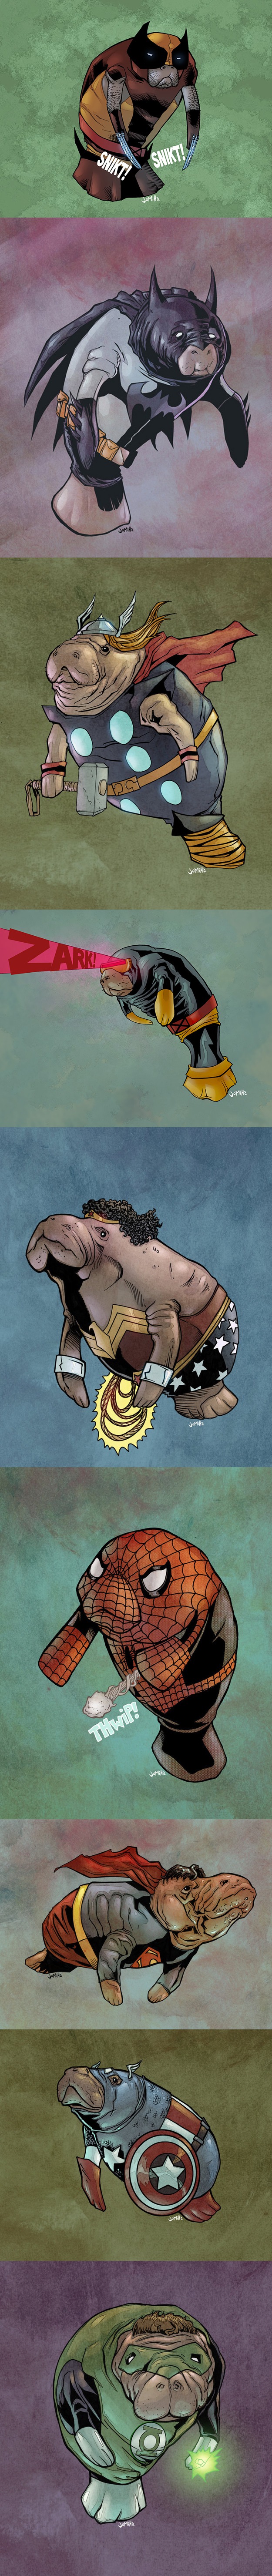 marvel comic superheros as manatees